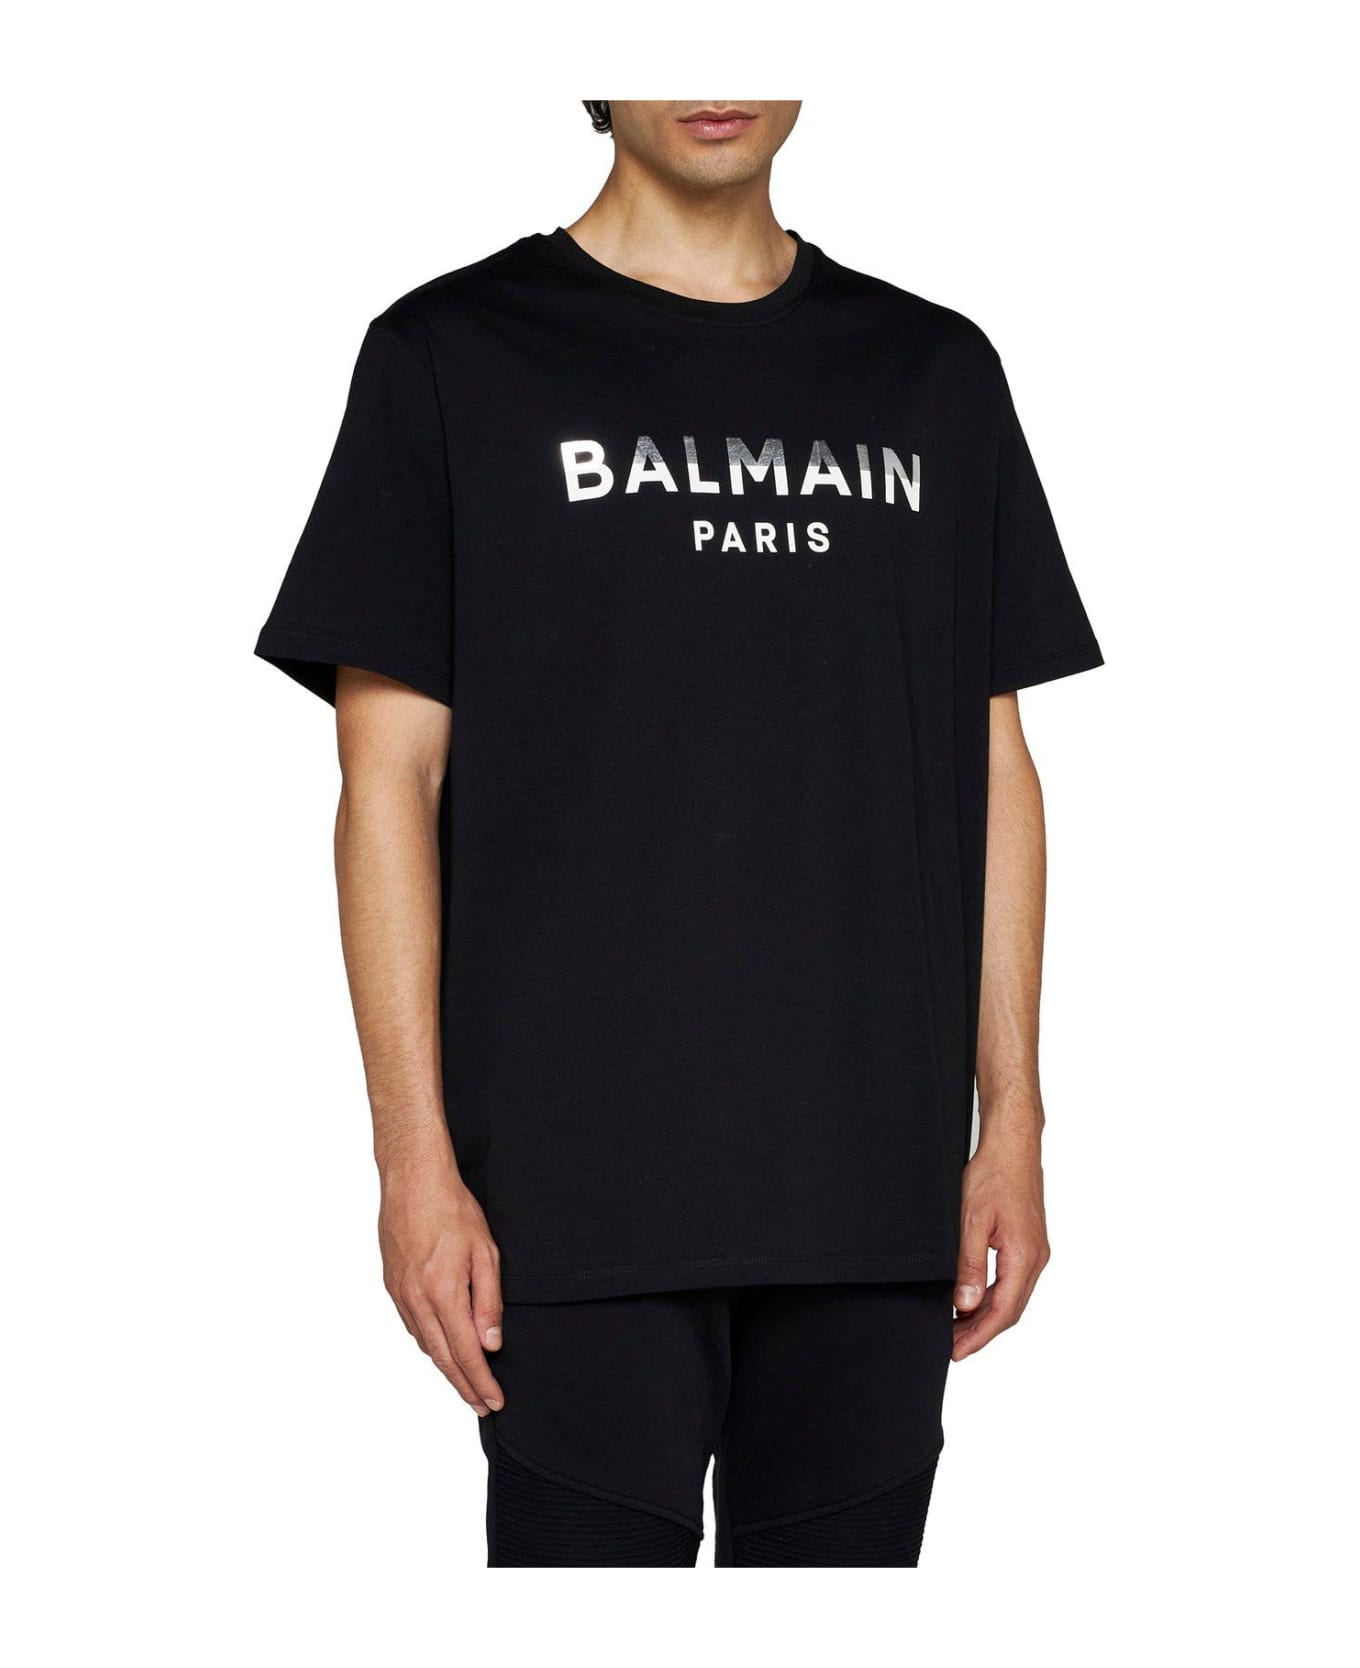 Balmain Logo Printed Crewneck T-shirt - Noir/argent シャツ